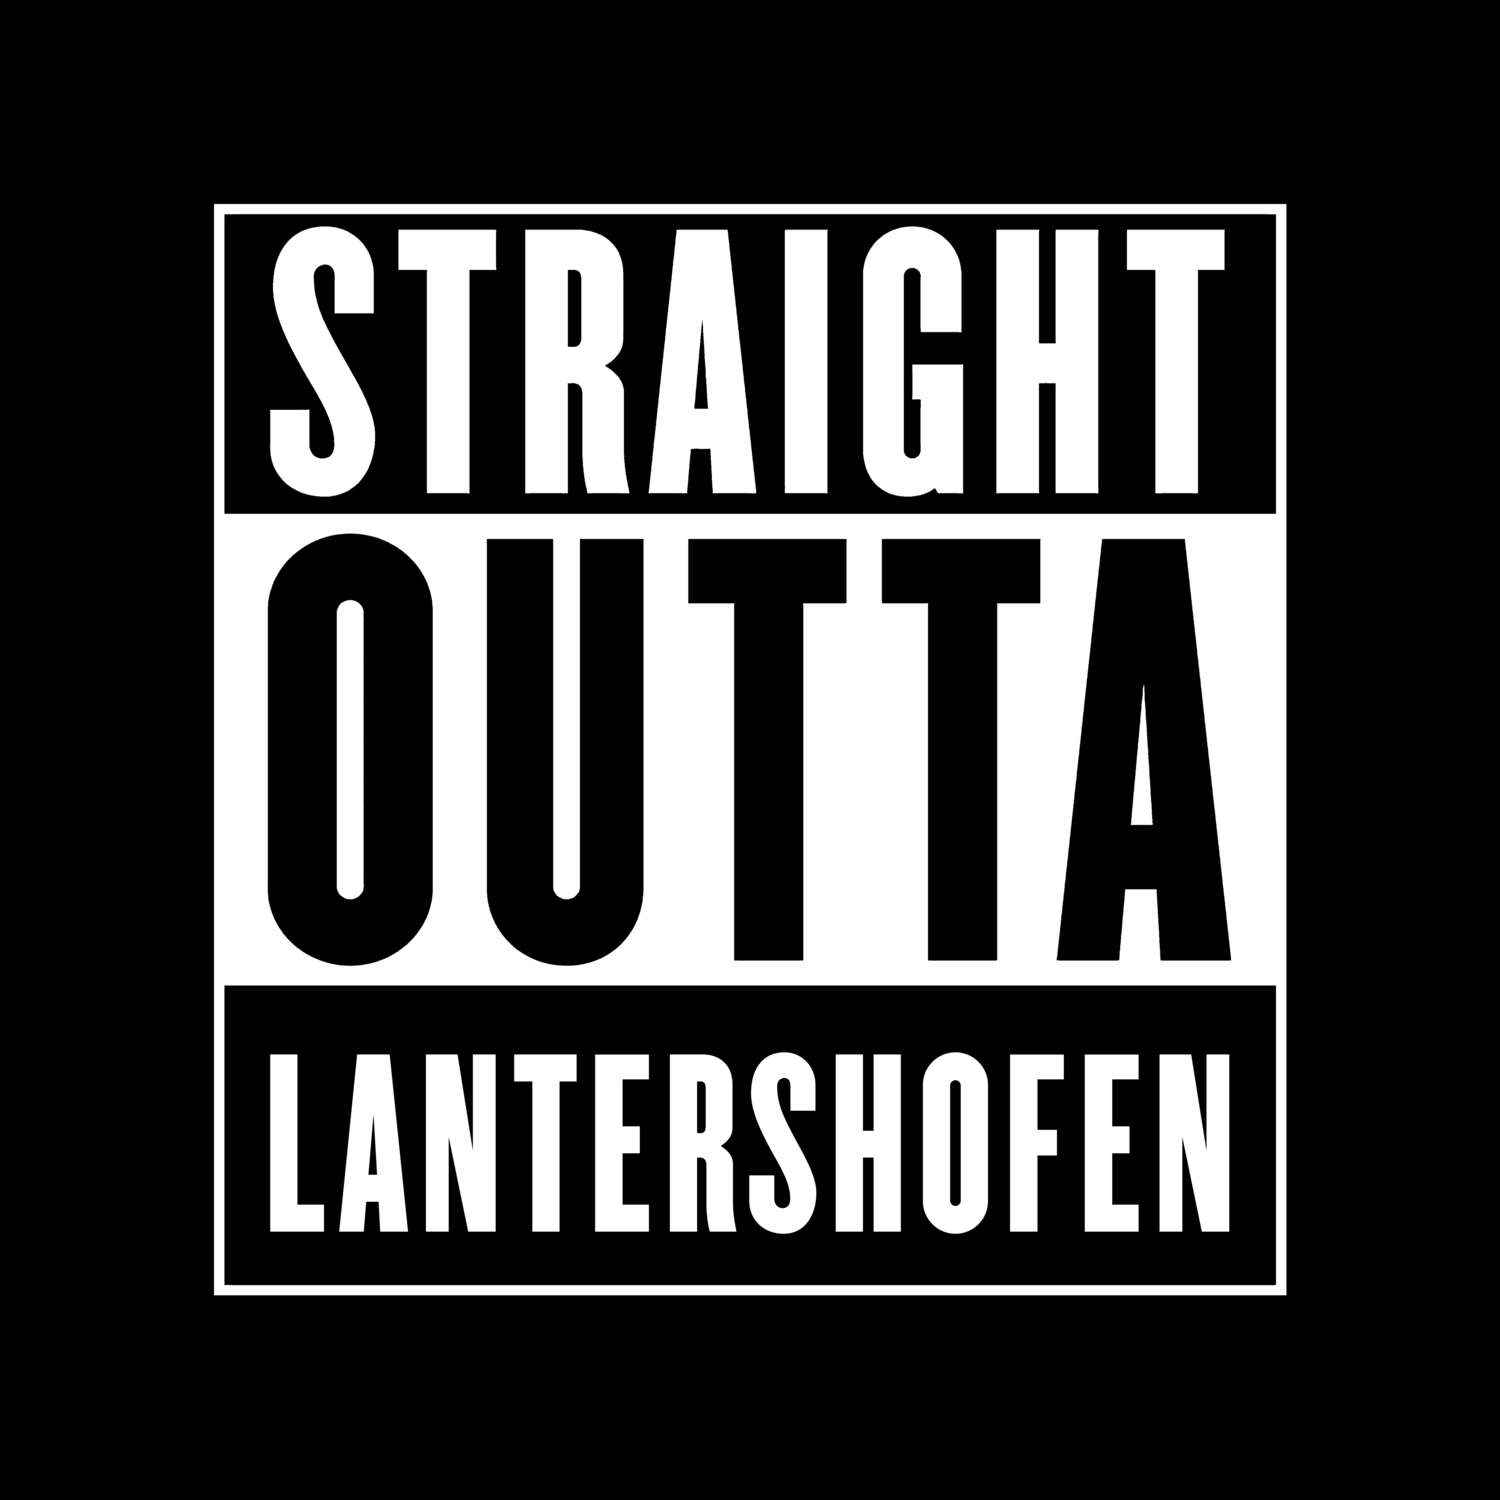 Lantershofen T-Shirt »Straight Outta«